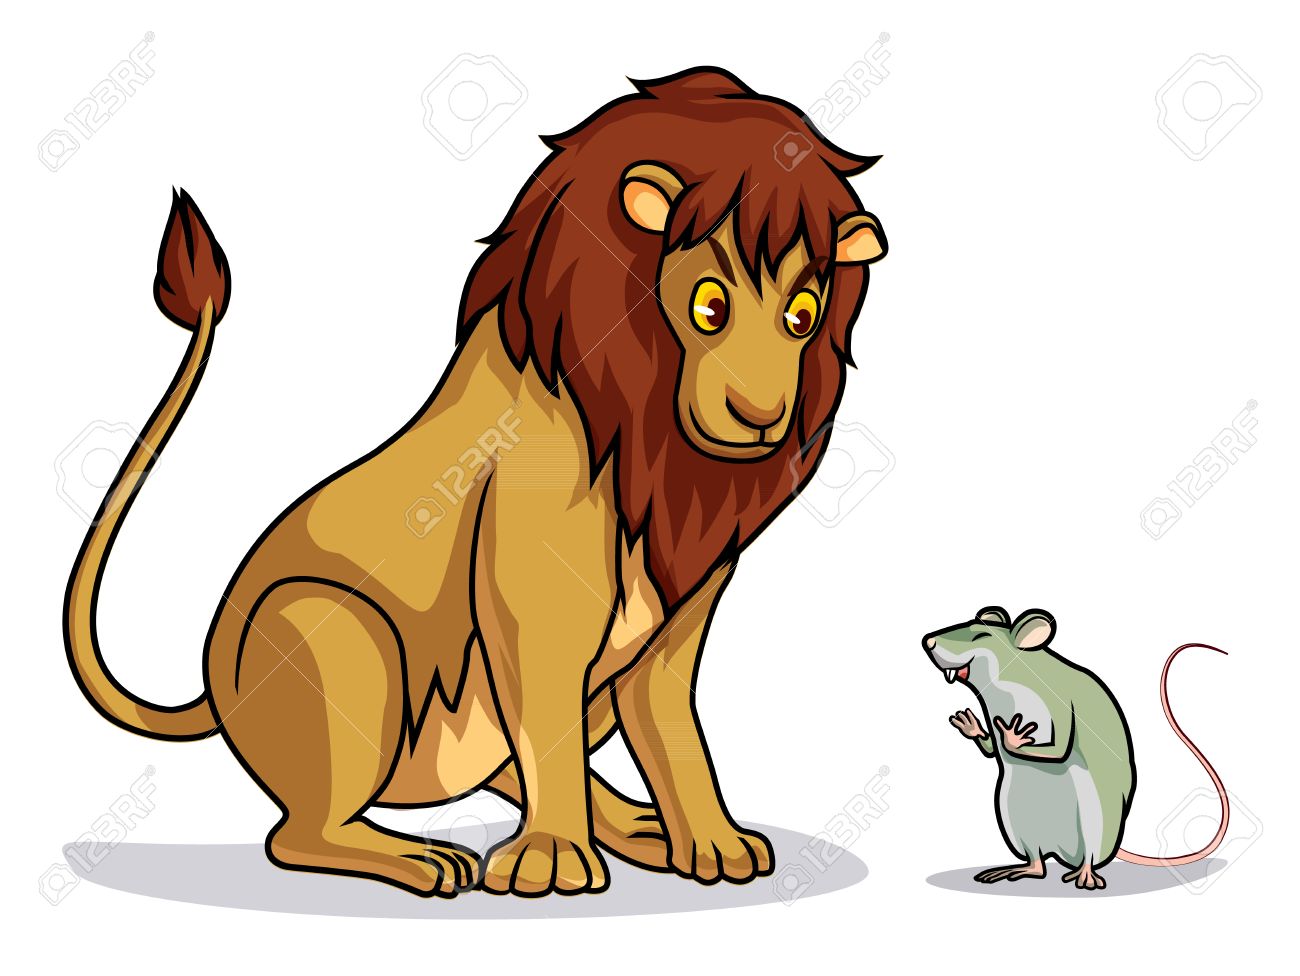 54417141-lion-and-rat-draw-cartoon-vector.jpg